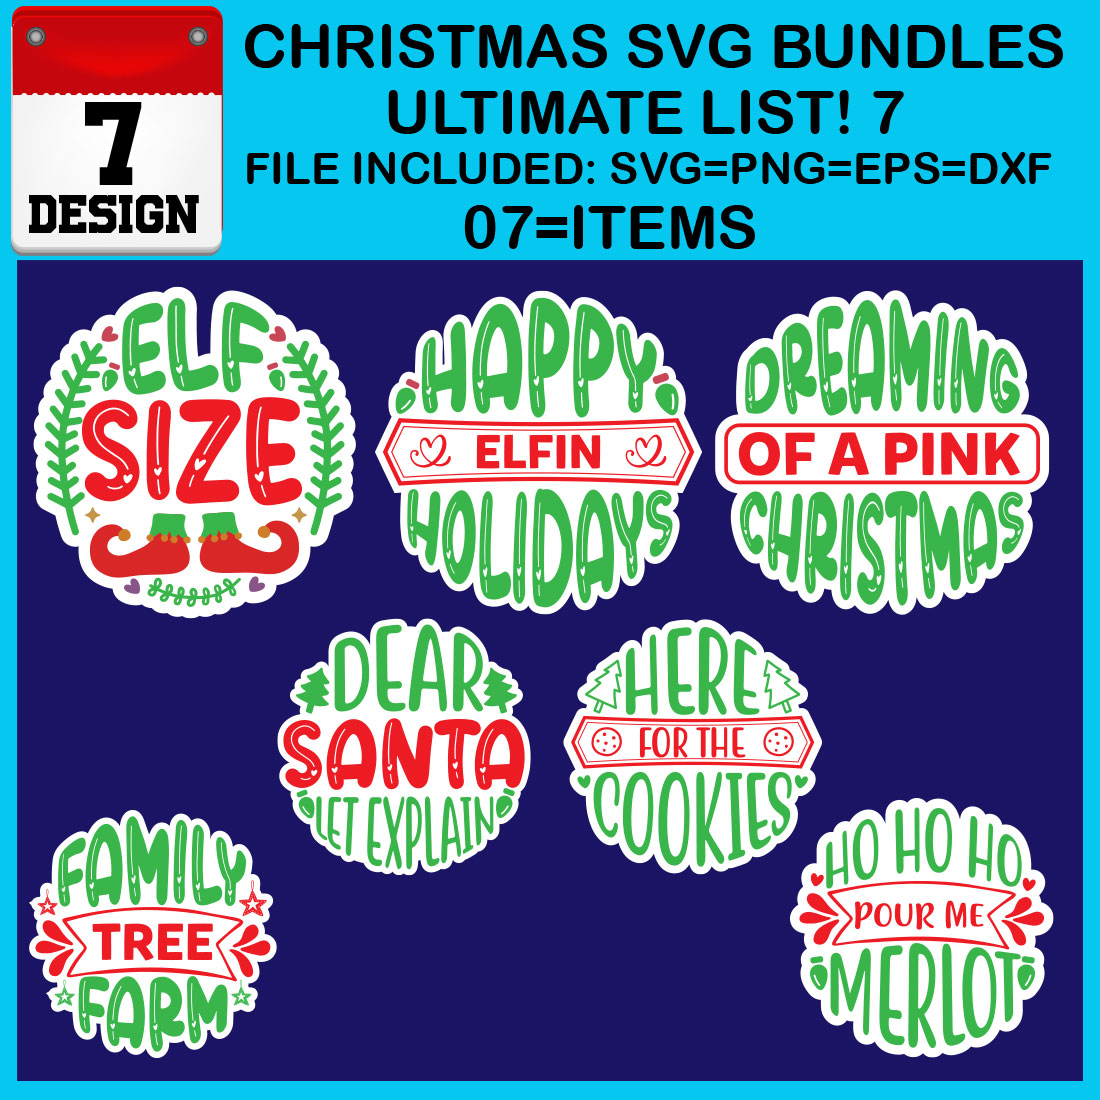 Free Ultimate List! 7 Christmas SVG Bundles cover image.